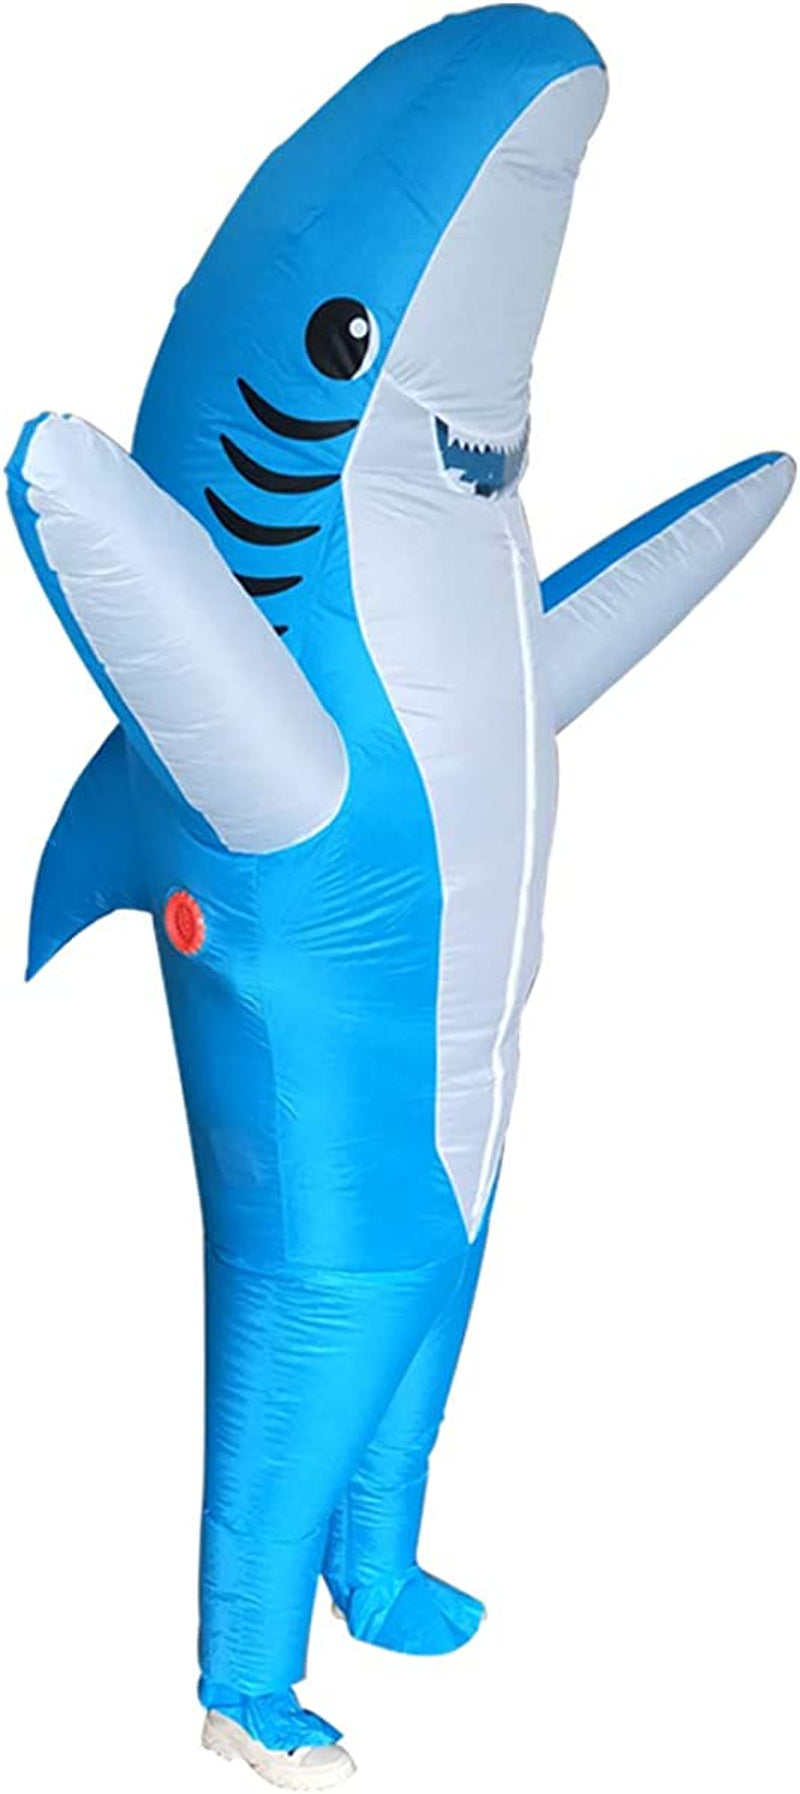 Stegosaurus Inflatable Shark Costume for Adult Funny Inflatable Halloween Costumes Cosplay Fantasy Costume  Stegosaurus Blue  